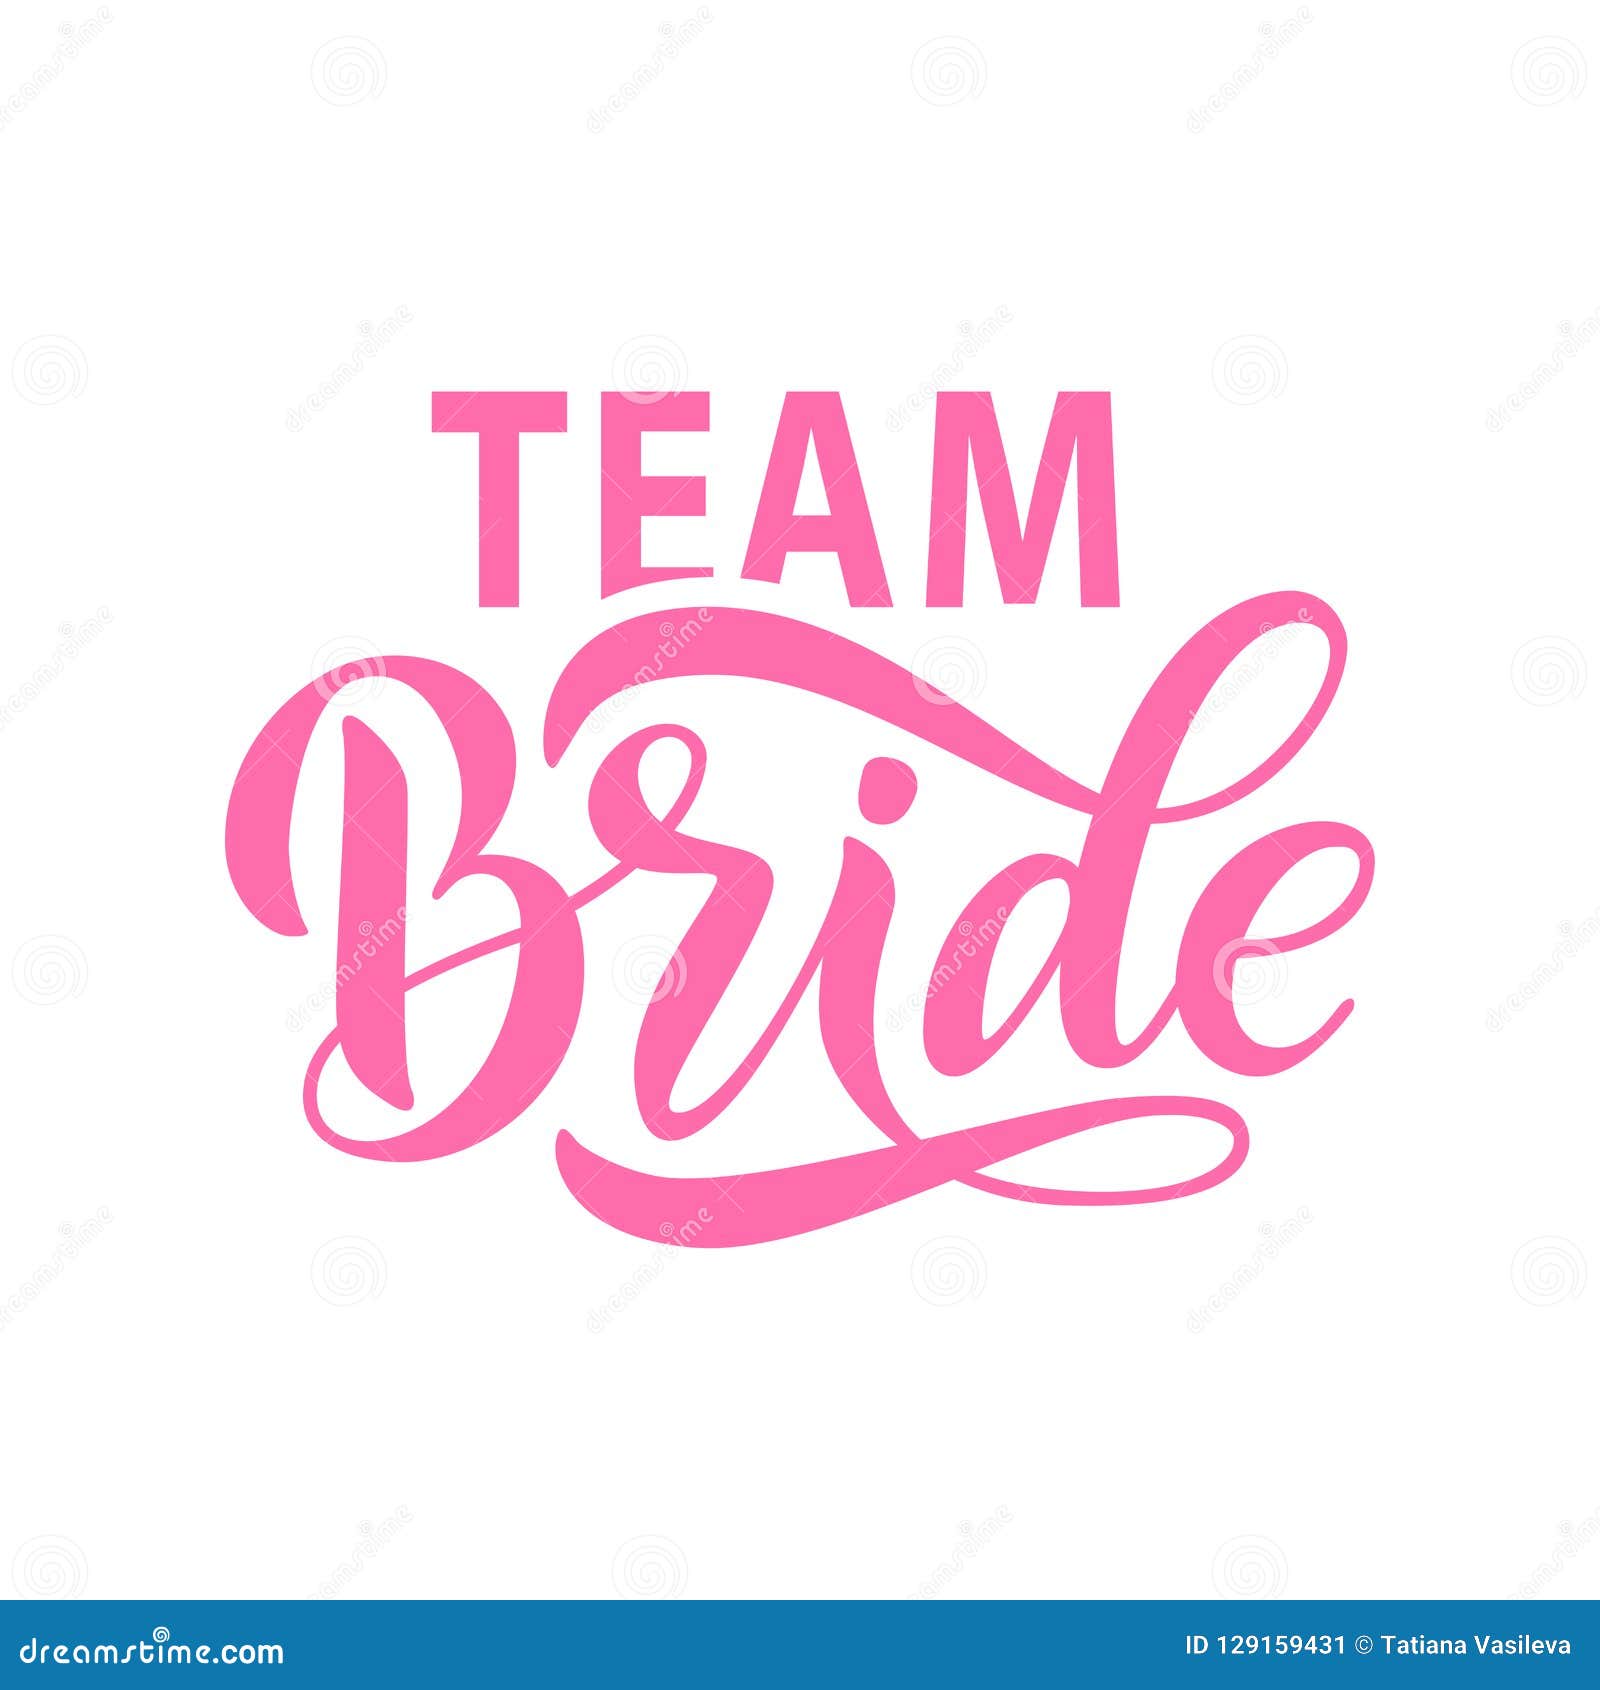 Team bride Vectors & Illustrations for Free Download